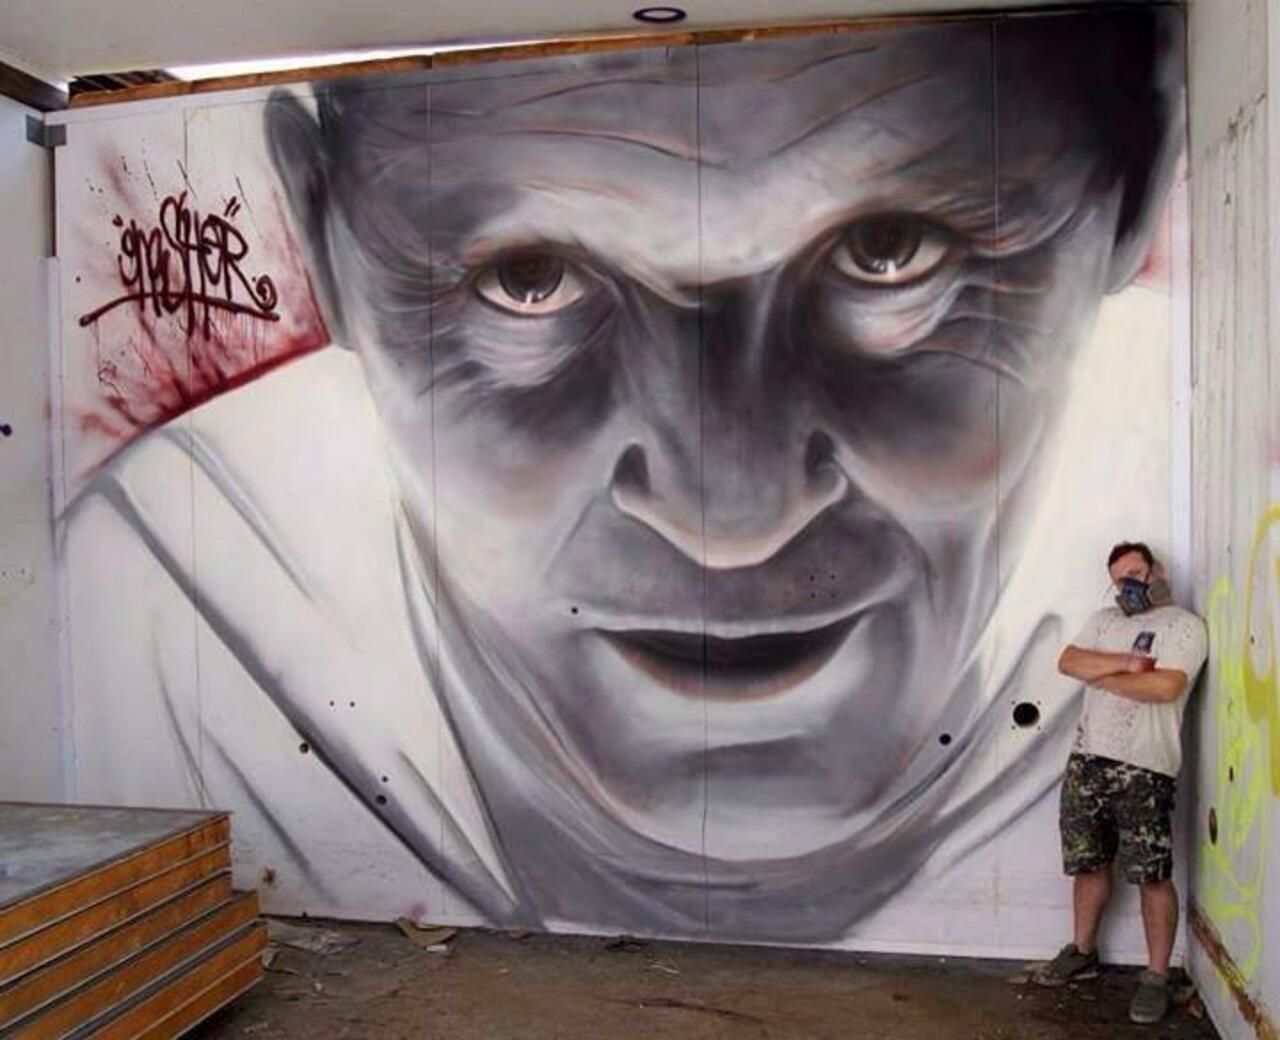 Artist @GnasherMurals new awesome Street Art portrait of Hannibal Lector #art #graffiti #mural #streetart http://t.co/lZuxdkKS4h